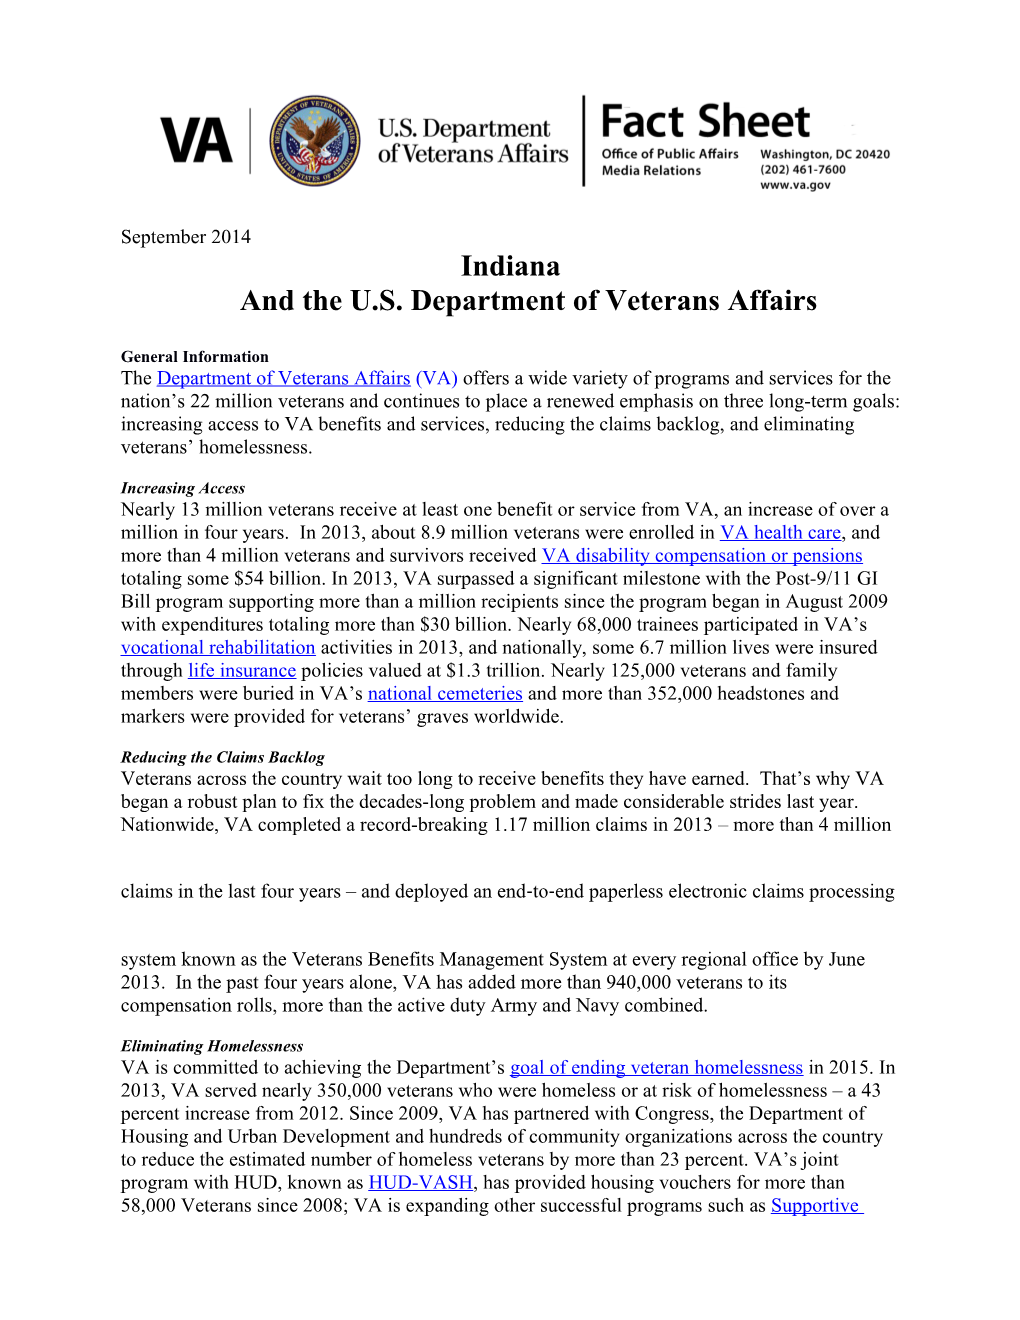 Indianaand the U.S. Department of Veterans Affairs